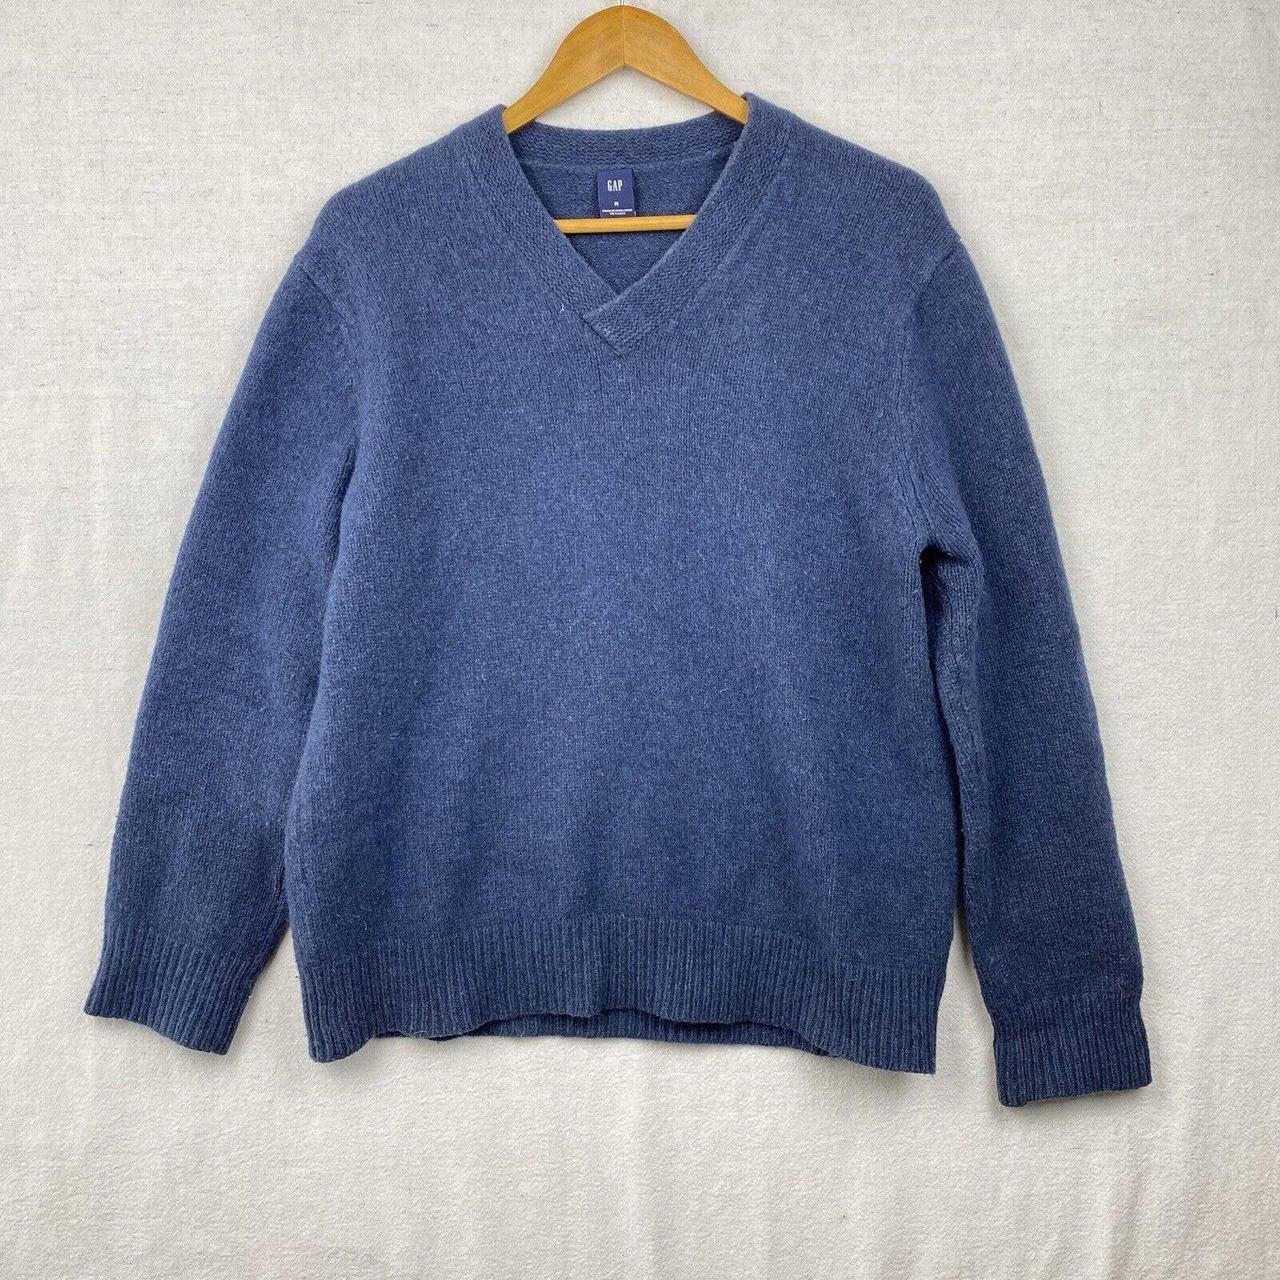 Gap Lambs Wool Angora Rabbit Blue Knit Sweater V... - Depop